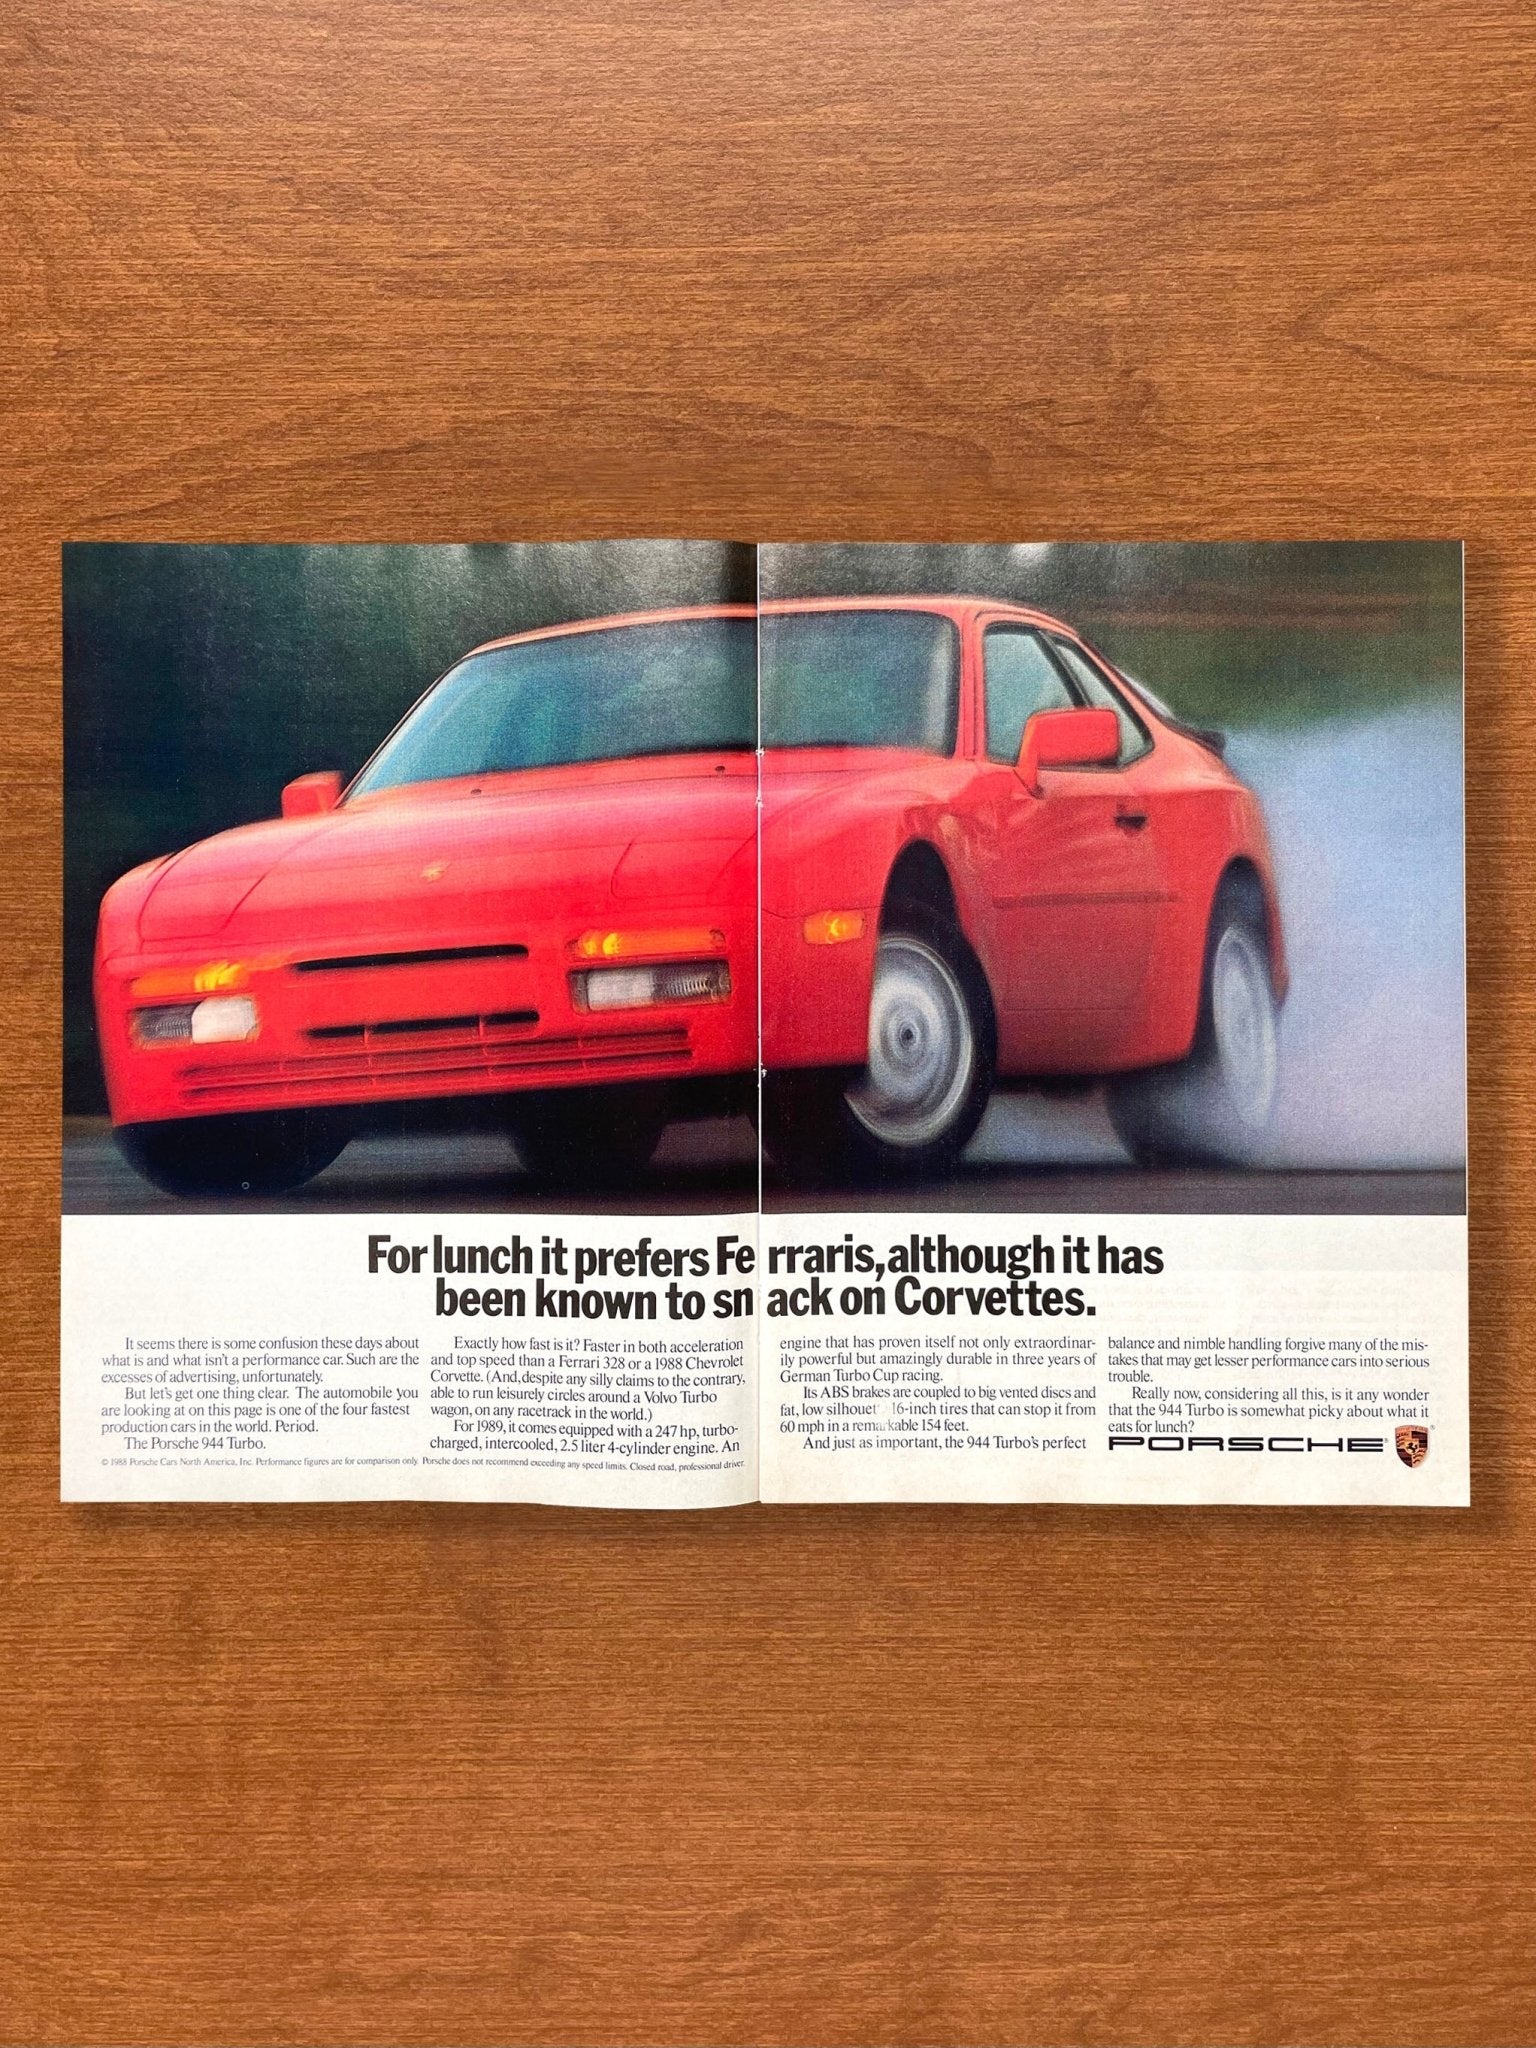 1988 Porsche 944 Turbo "For lunch it prefers Ferraris..." Advertisement